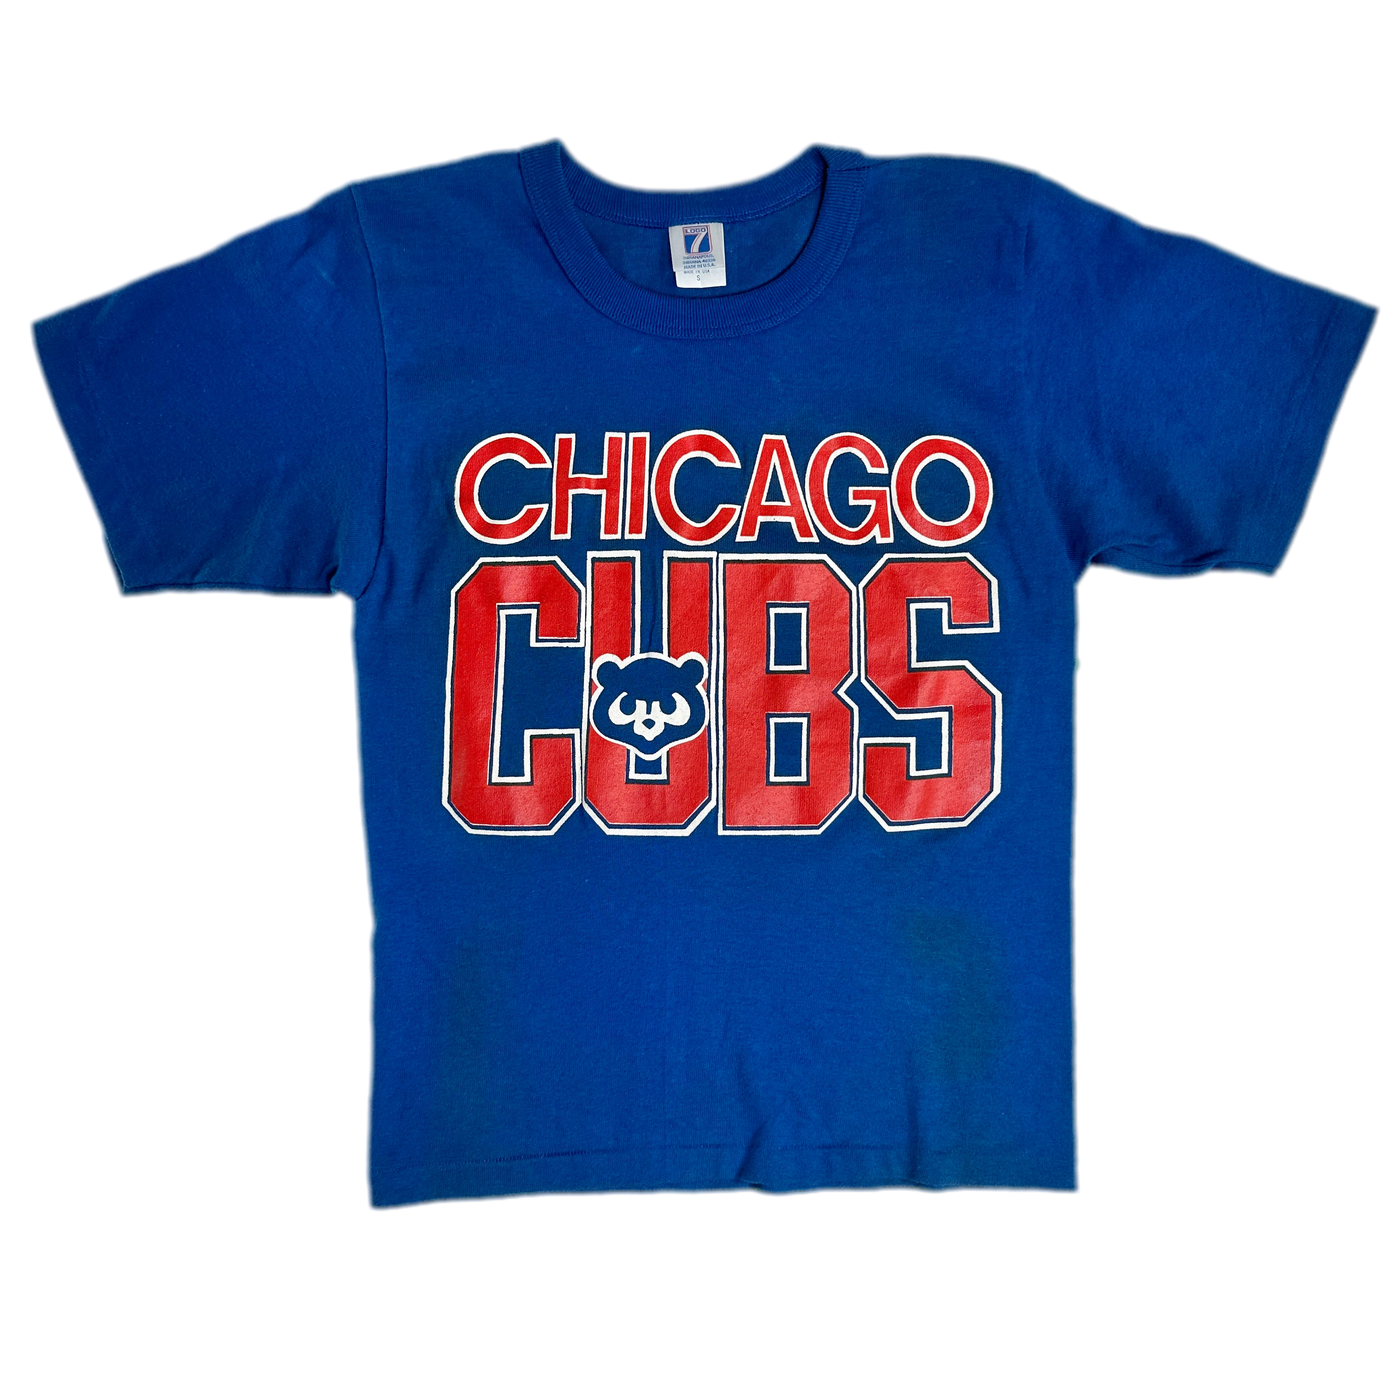 90's Chicago Cubs Blue Sports T-shirt sz S